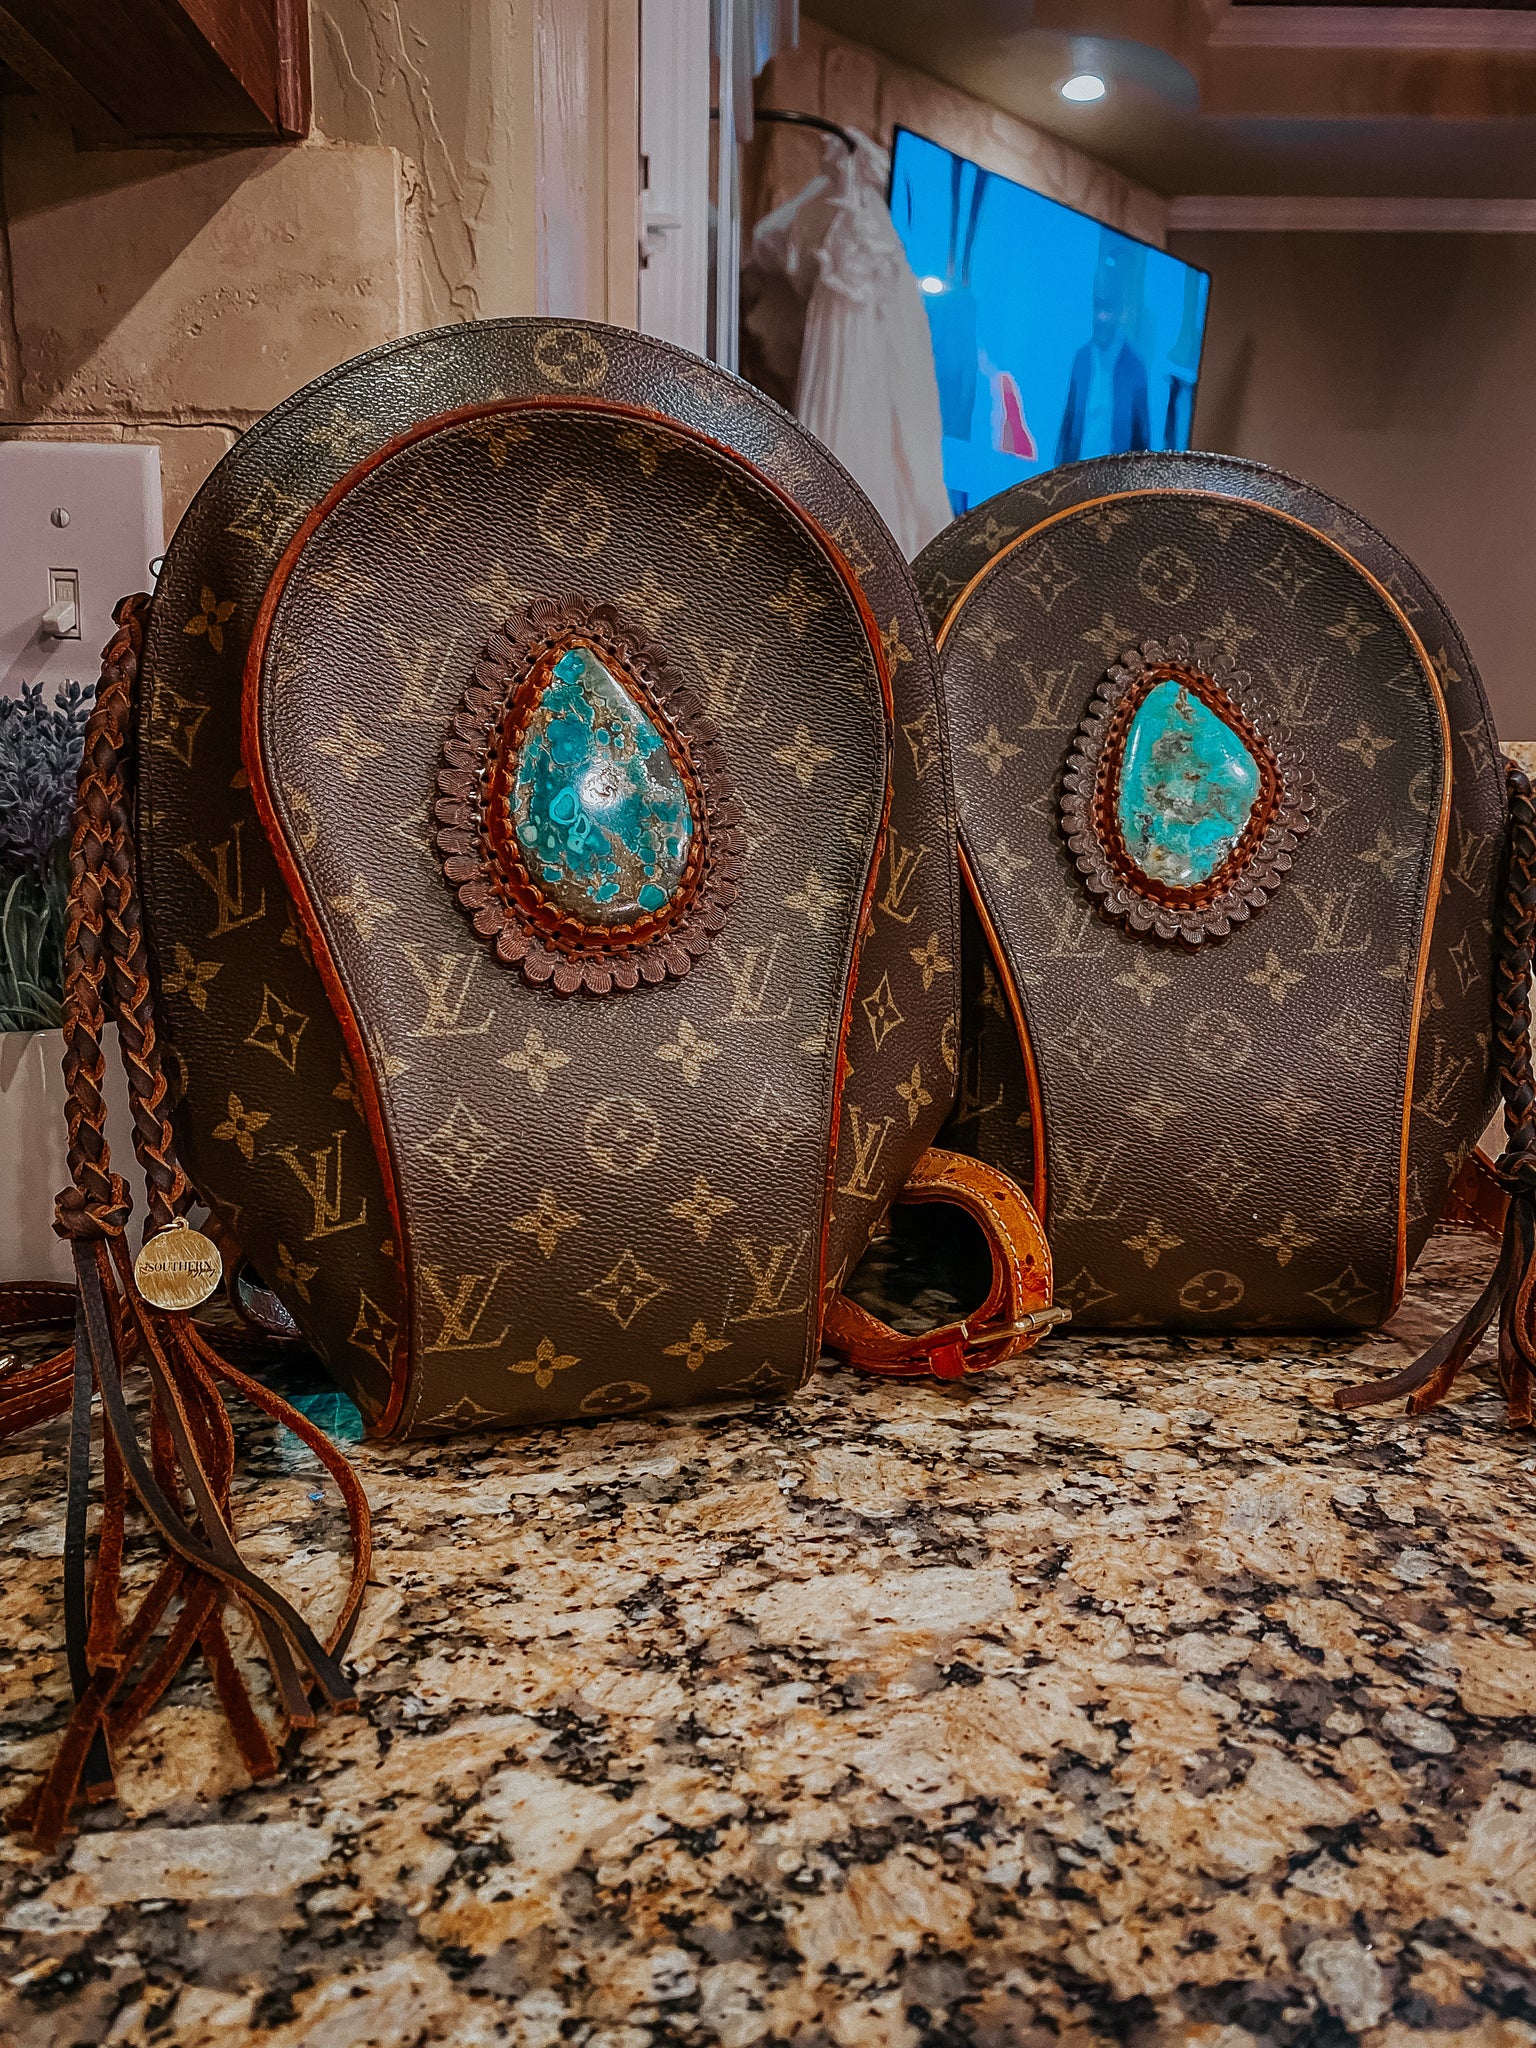 Please Authenticate this Louis Vuitton Ellipse backpack